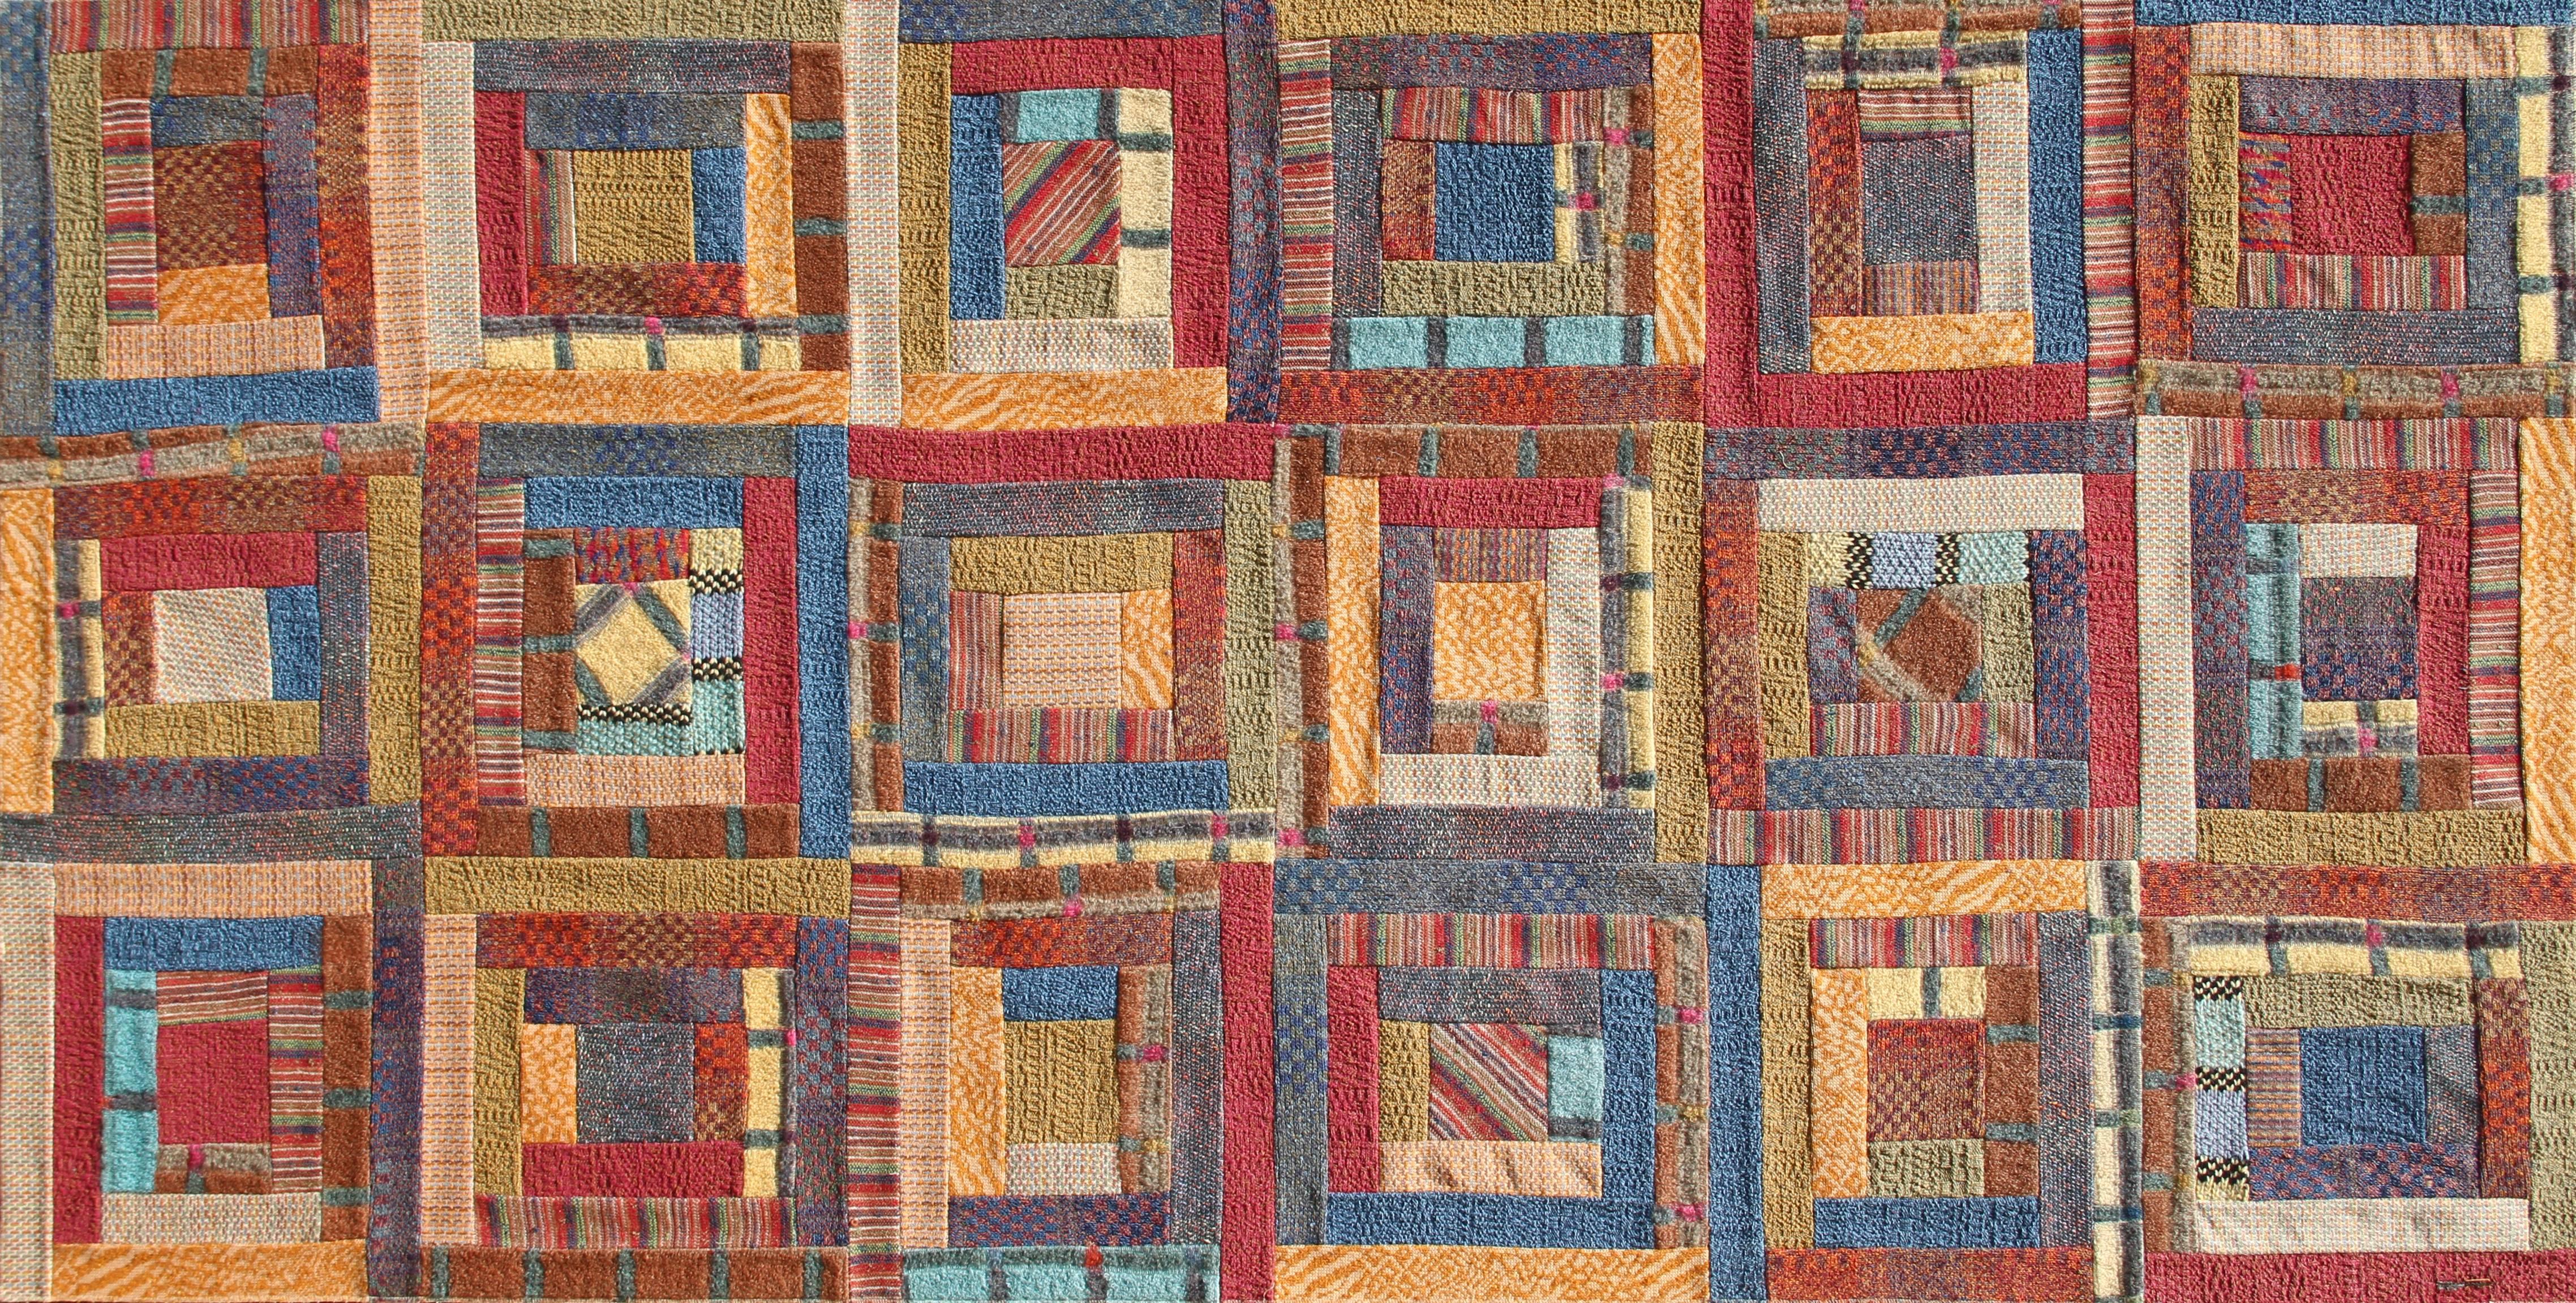 Large Missoni Wool Tapestry Wall Hanging - Mixed Media Art by Ottavio Missoni